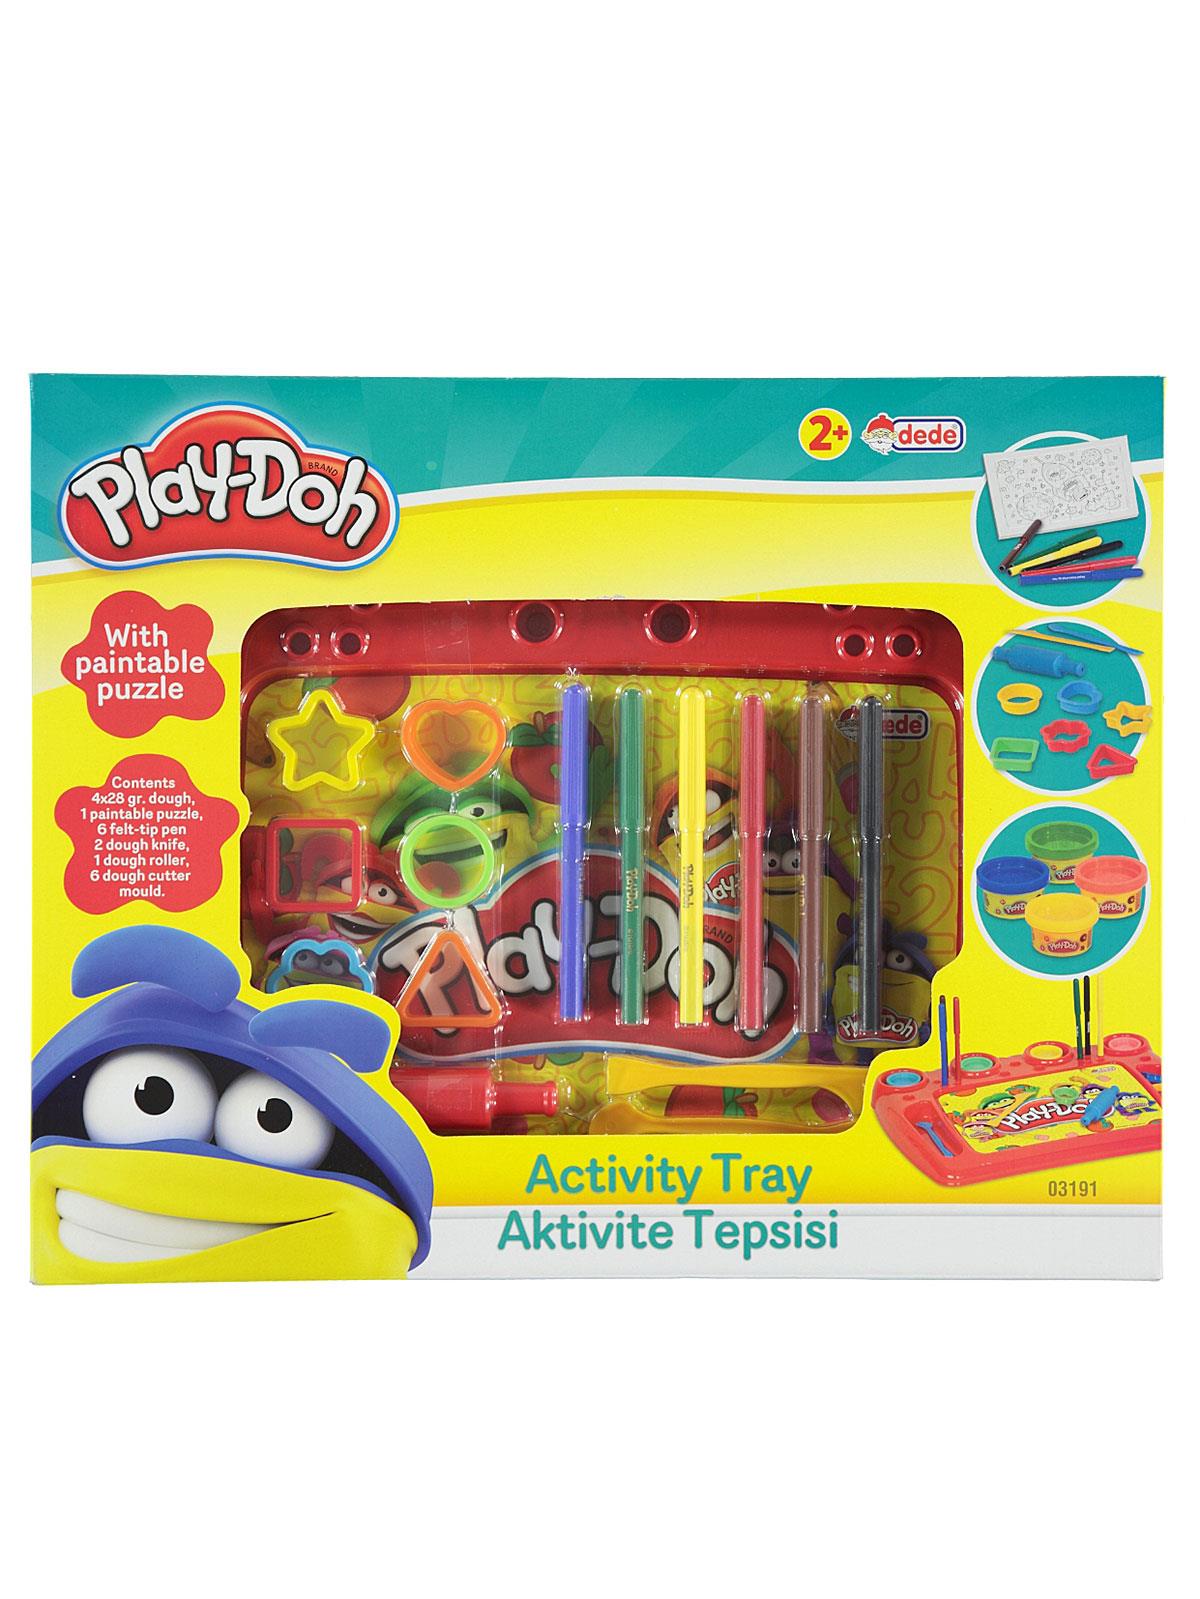 Play-Doh Aktivite Tepsisi 2+ Yaş Kırmızı